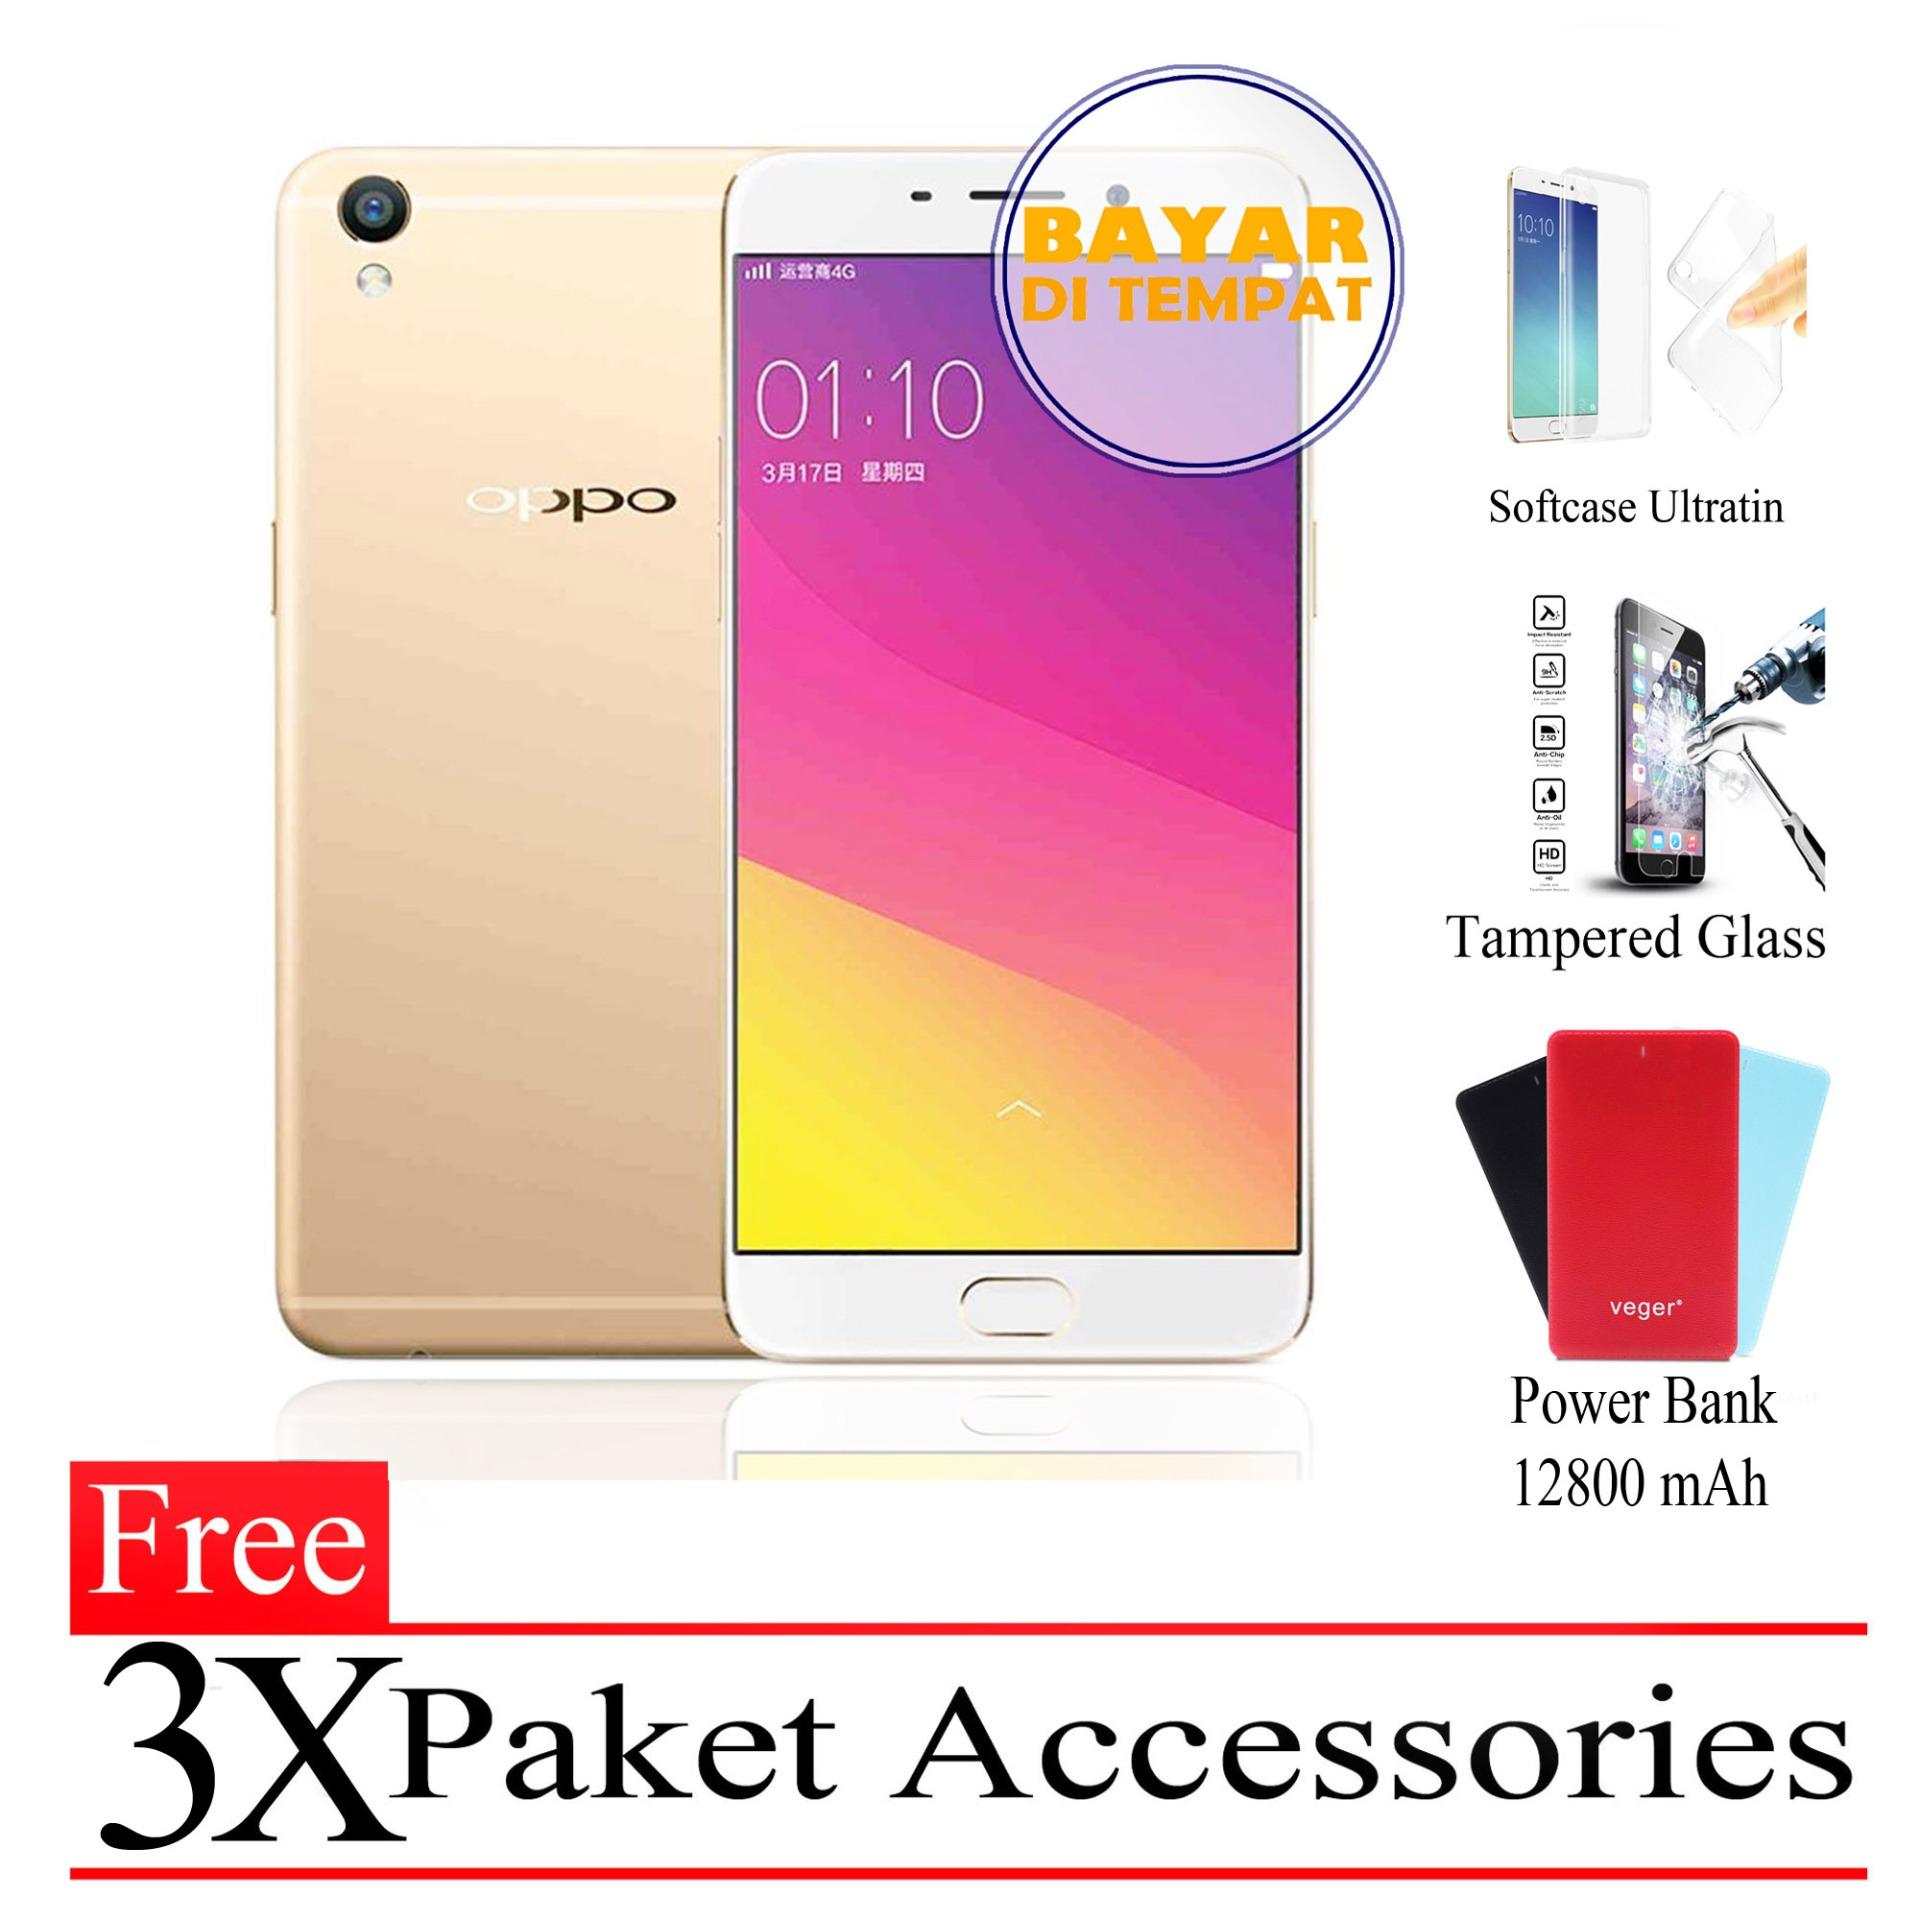 Oppo A37 Ram 2GB/16GB (Free 3x Paket Accessories) - Smartphone